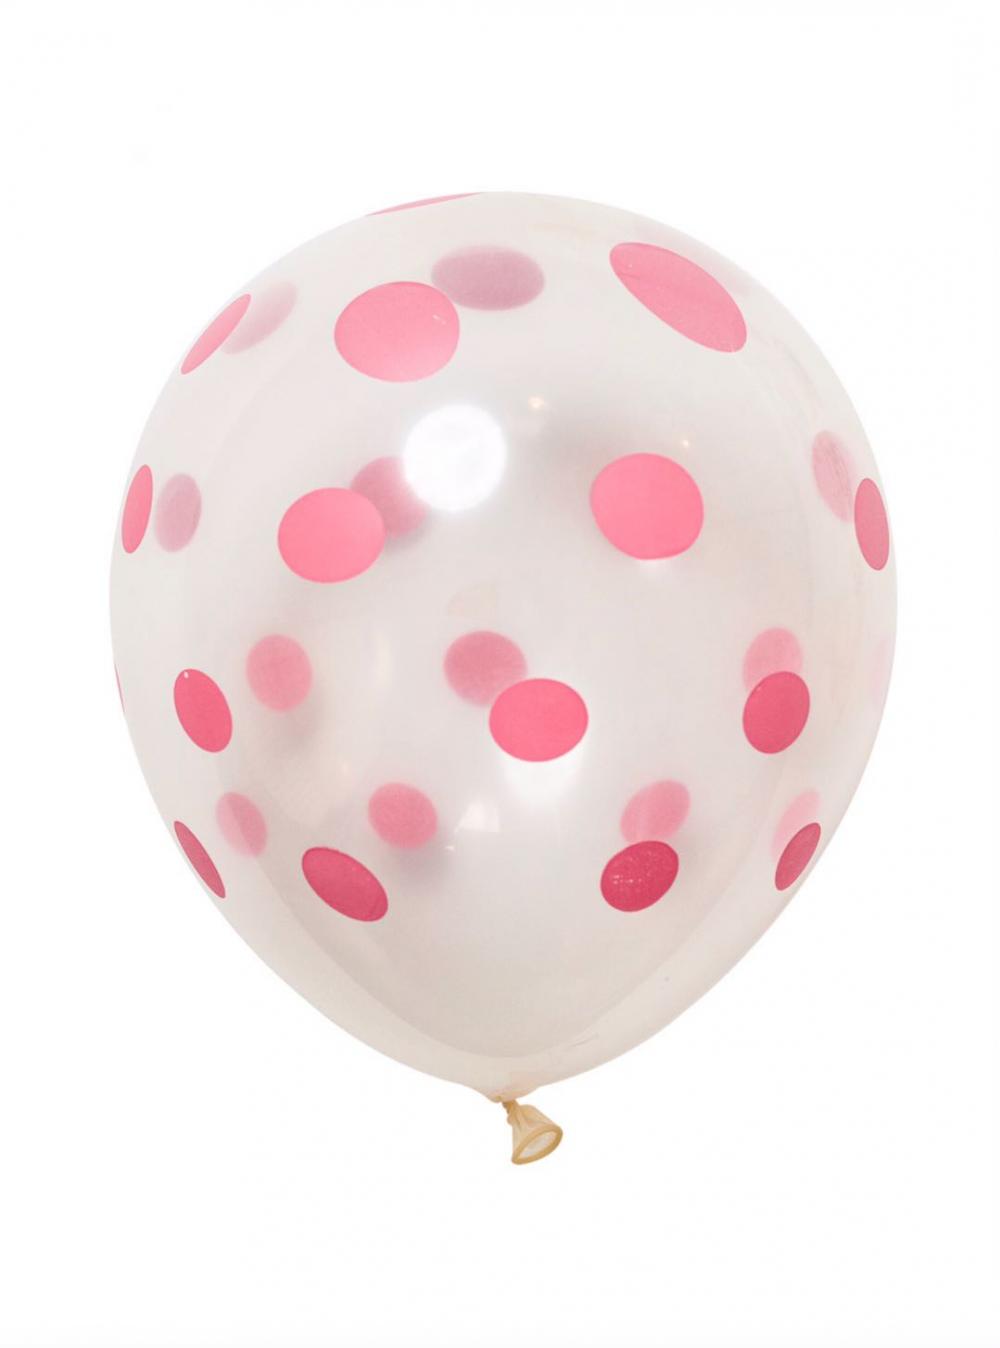 12 Inch Standard Polka Dot Balloons ClearBalloon Pink Dot (100PCS)